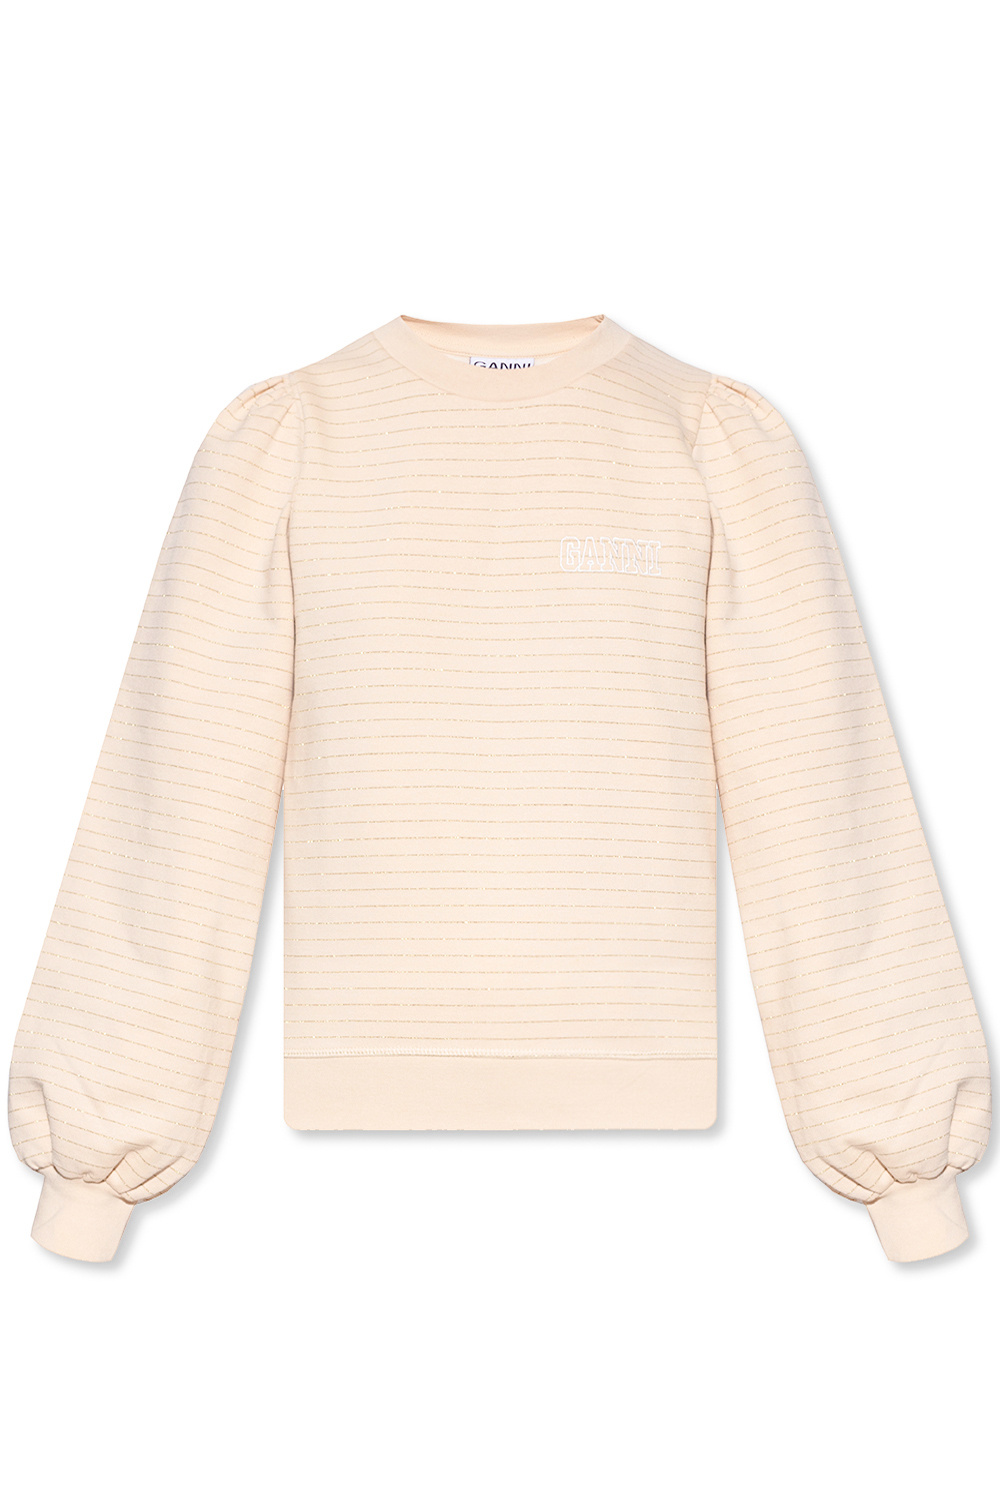 Ganni moschino logo print cotton sweatshirt item